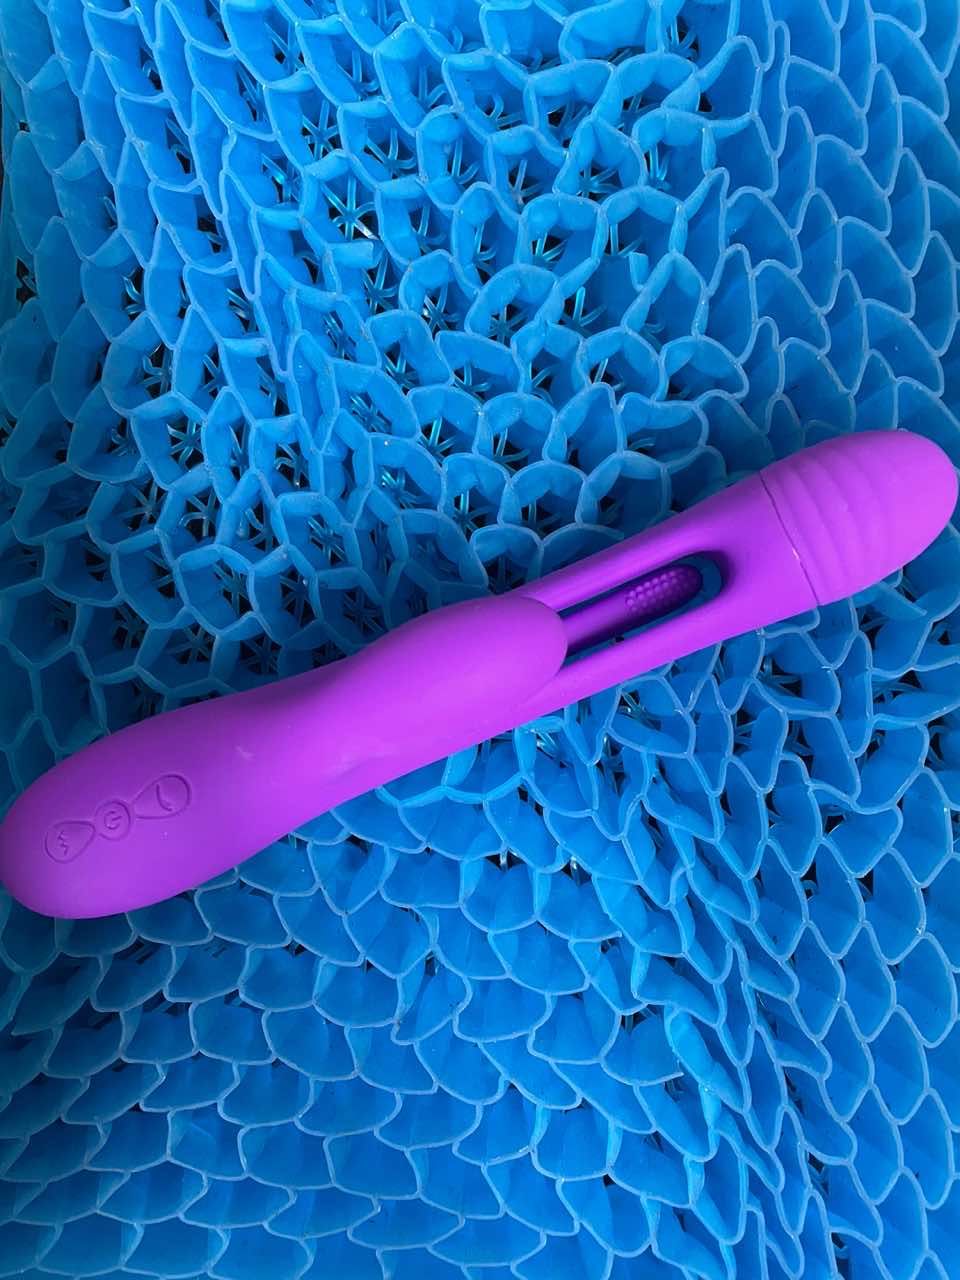 Fleshline - Rabbit Tapping Vibrating All-In-One G-Spot Vibrator for Women photo review